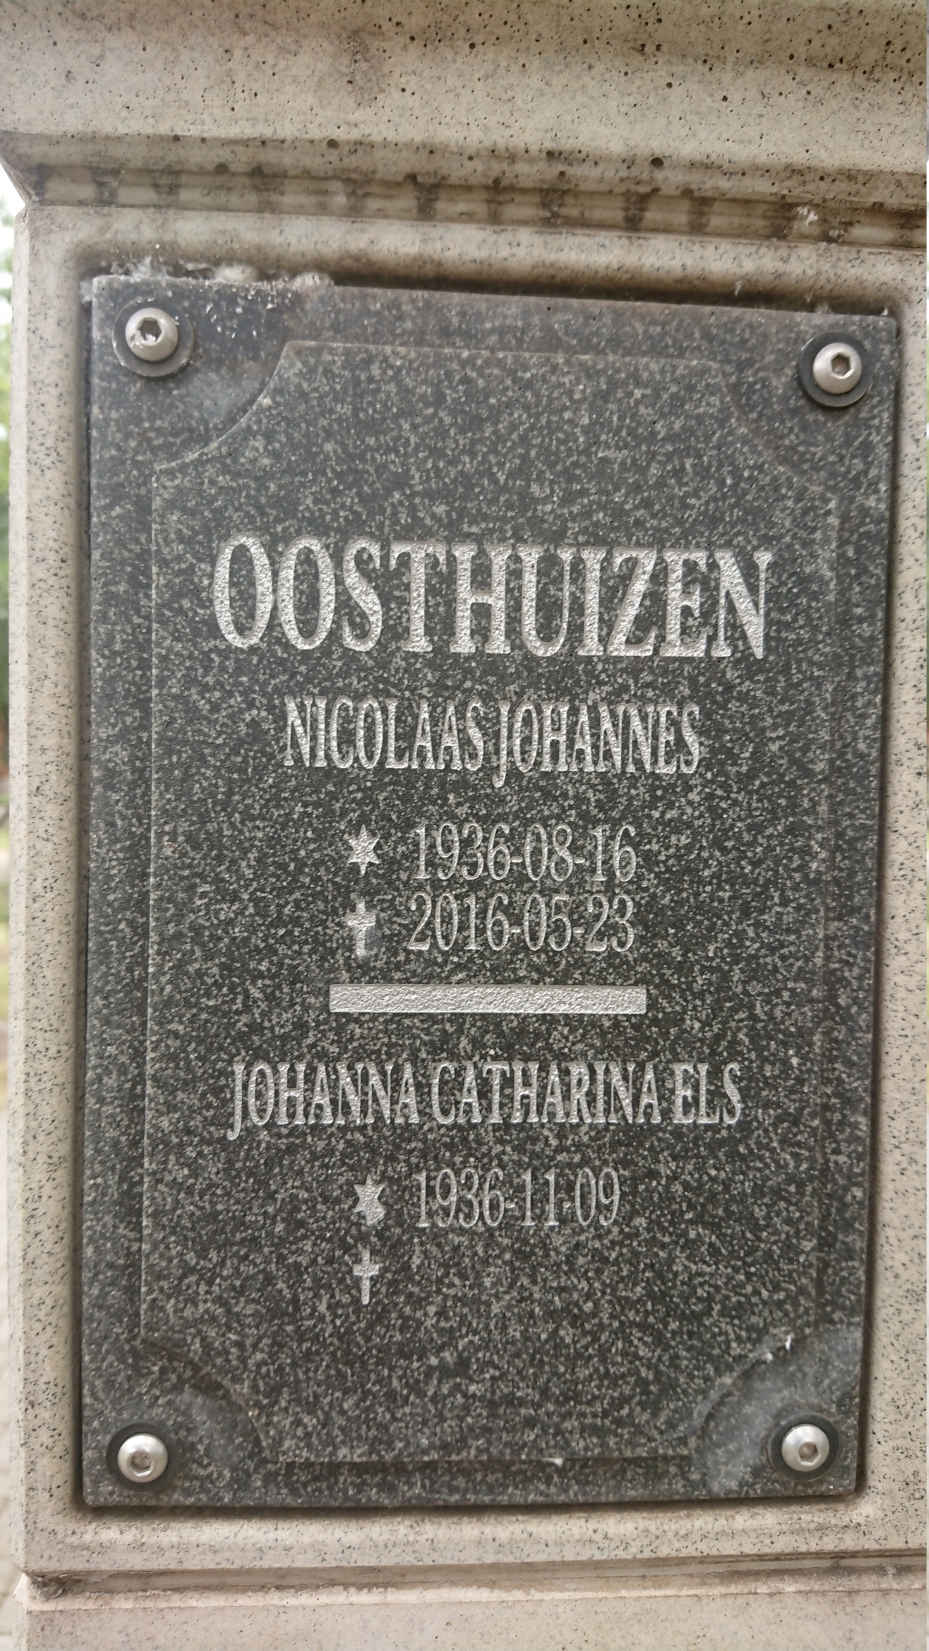 OOSTHUIZEN Nicolaas Johannes 1936-2016 & Johanna Catharina Els 1936-